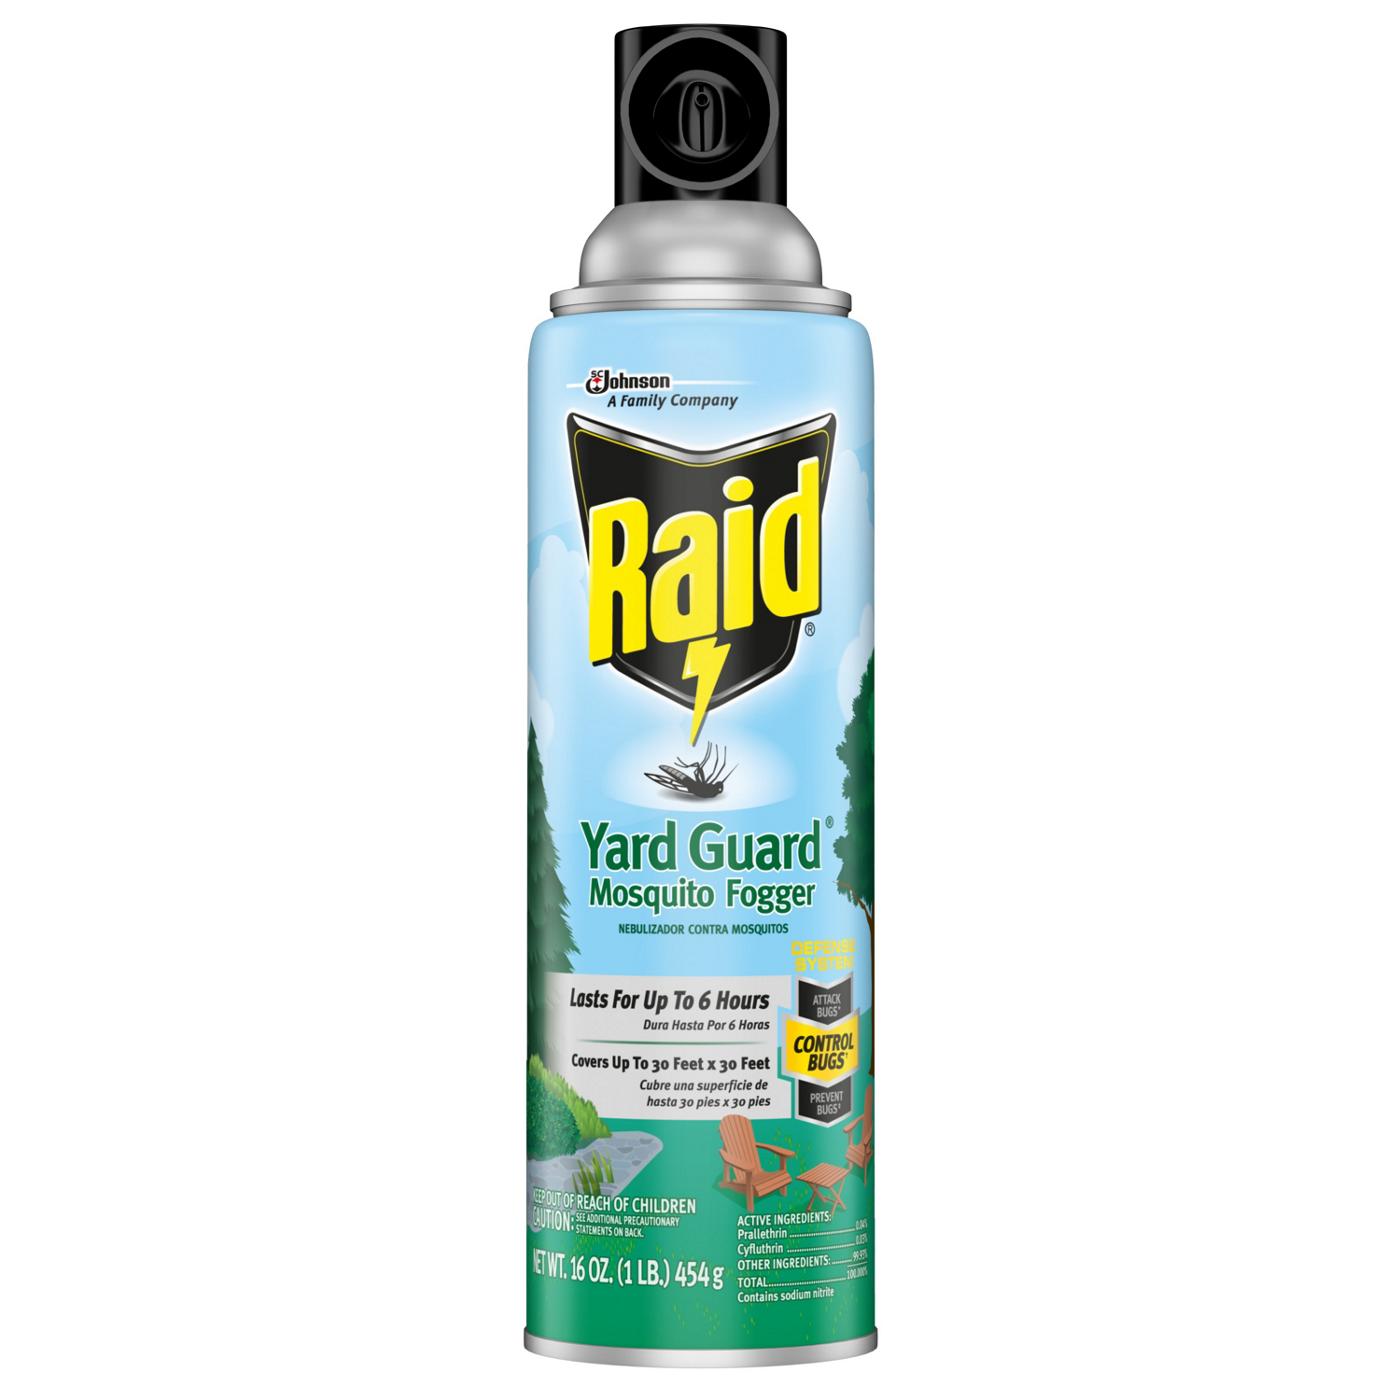 Raid Yard Guard Mosquito Fogger; image 1 of 2